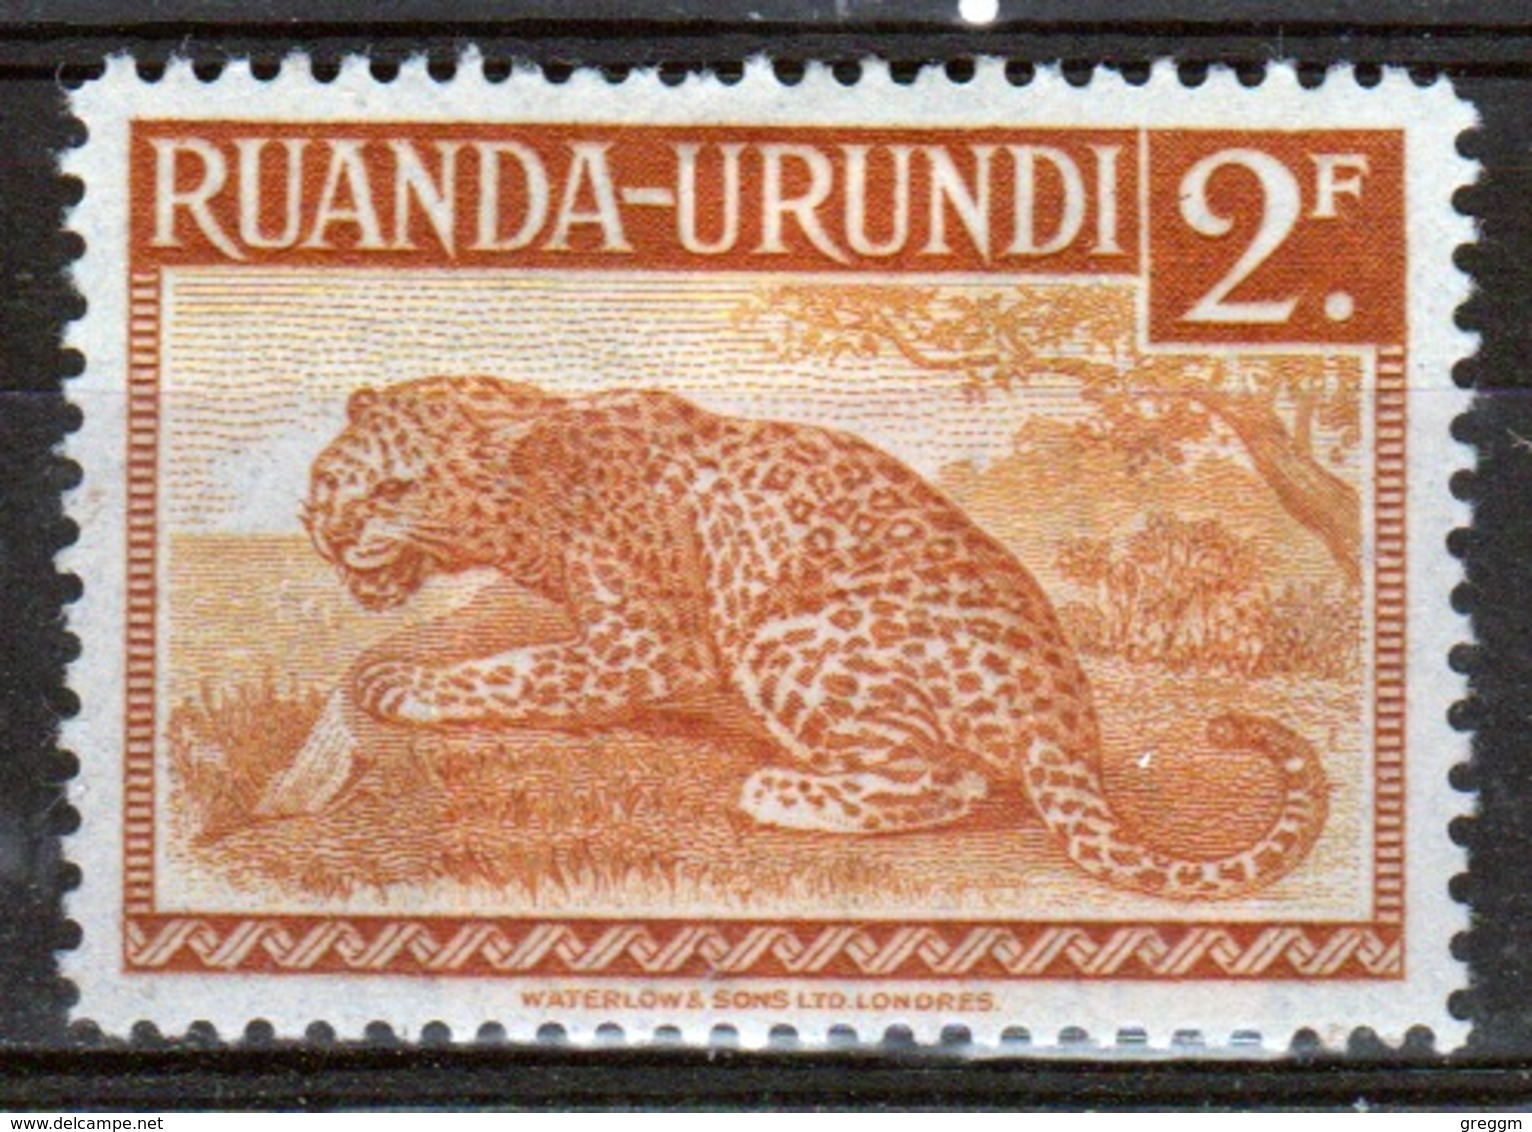 Ruanda-Urundi 1942 Single 2f Stamp From The Definitive Set. - Neufs